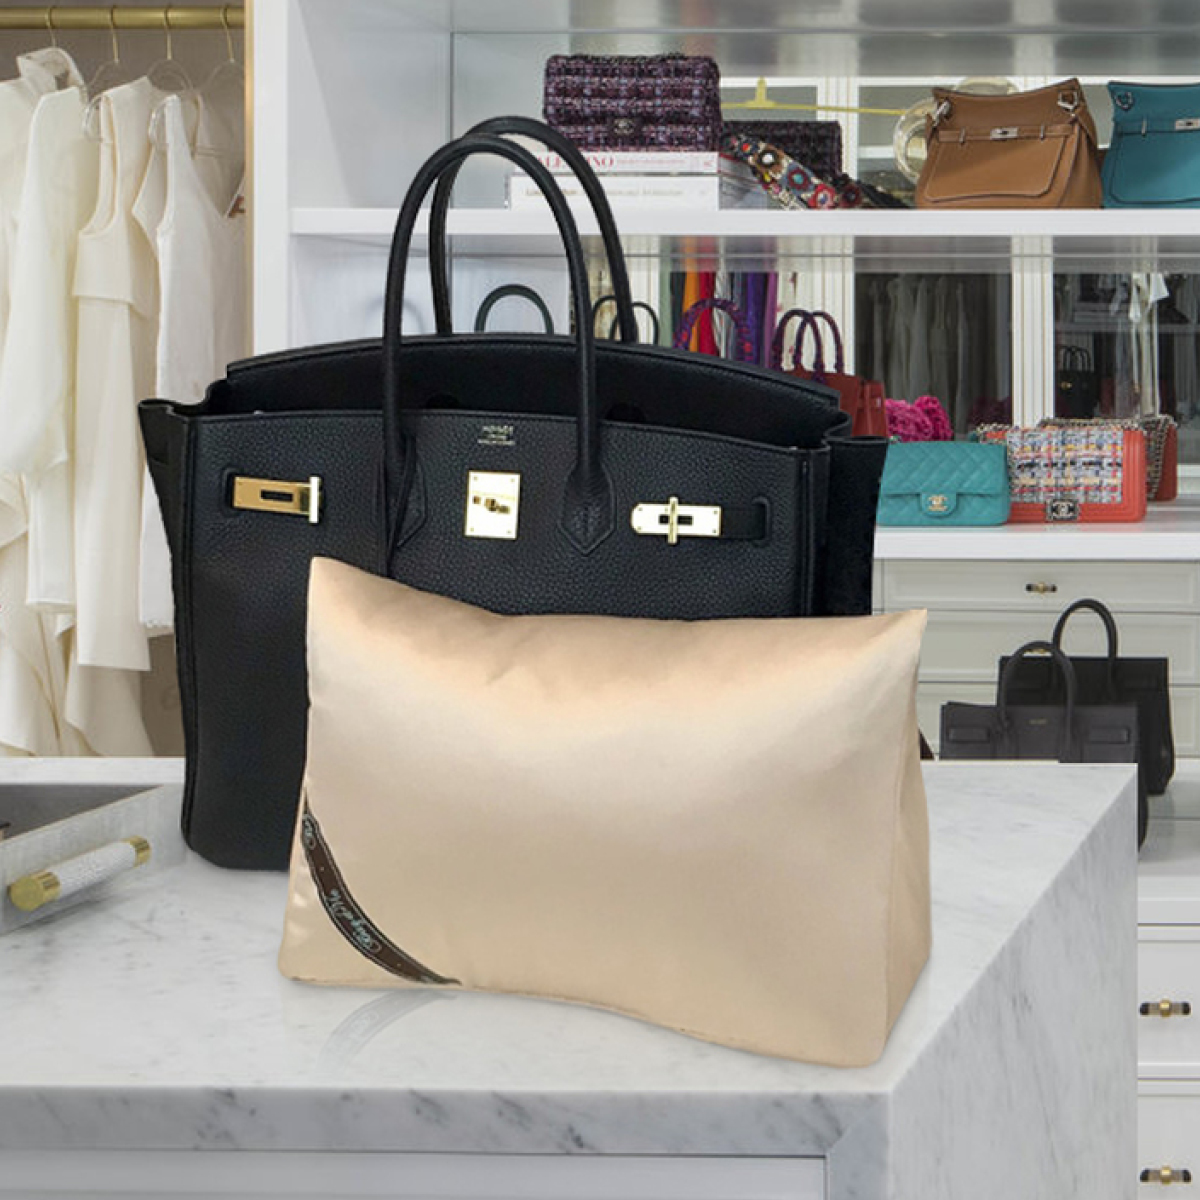  Bag-a-Vie Purse Shaper Pillow Insert - Black - Luxury Handbag  Shaper Insert for Women's Purses - Handbag Custom Pillow Purse Accessories  for Birkin 35 : Clothing, Shoes & Jewelry